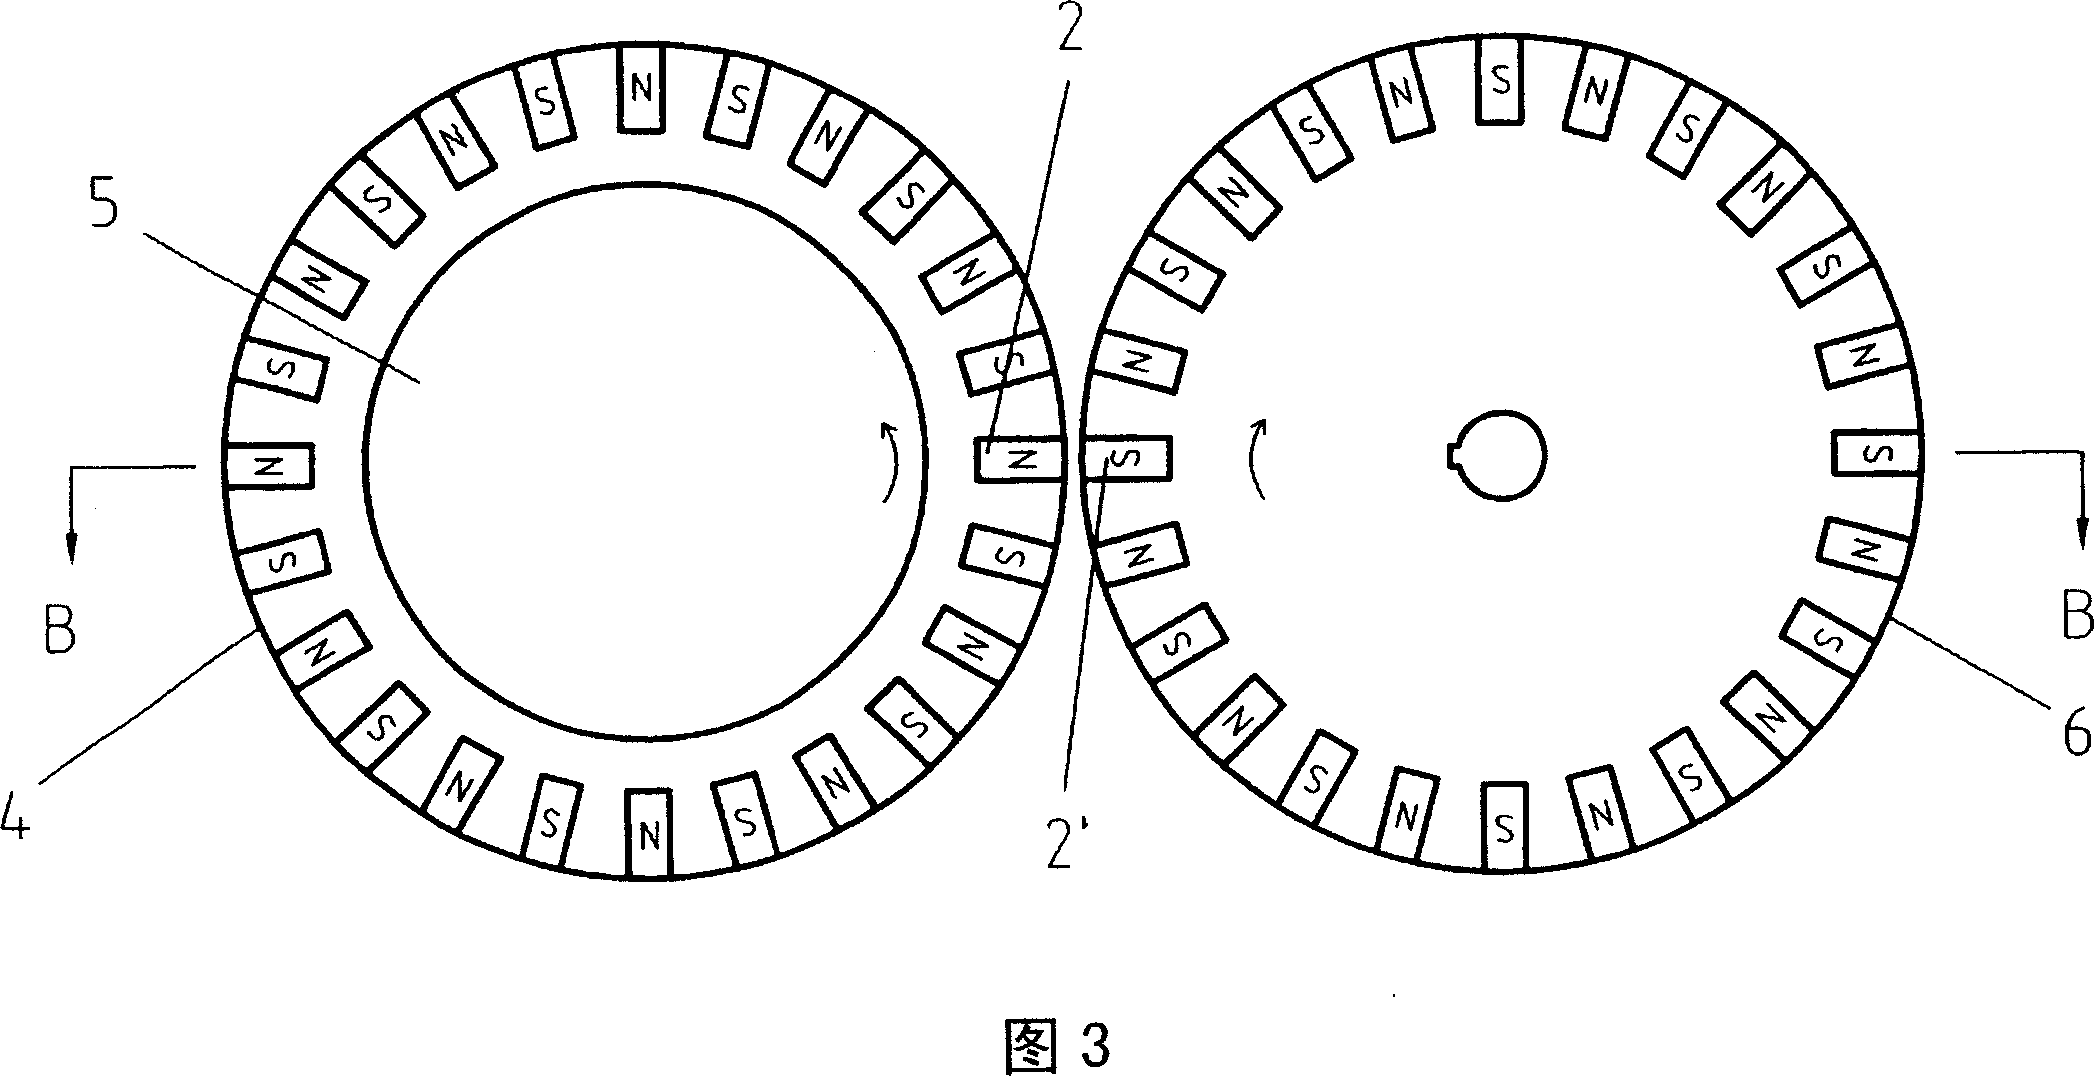 Permanent magnetic amtipodal gear wheel